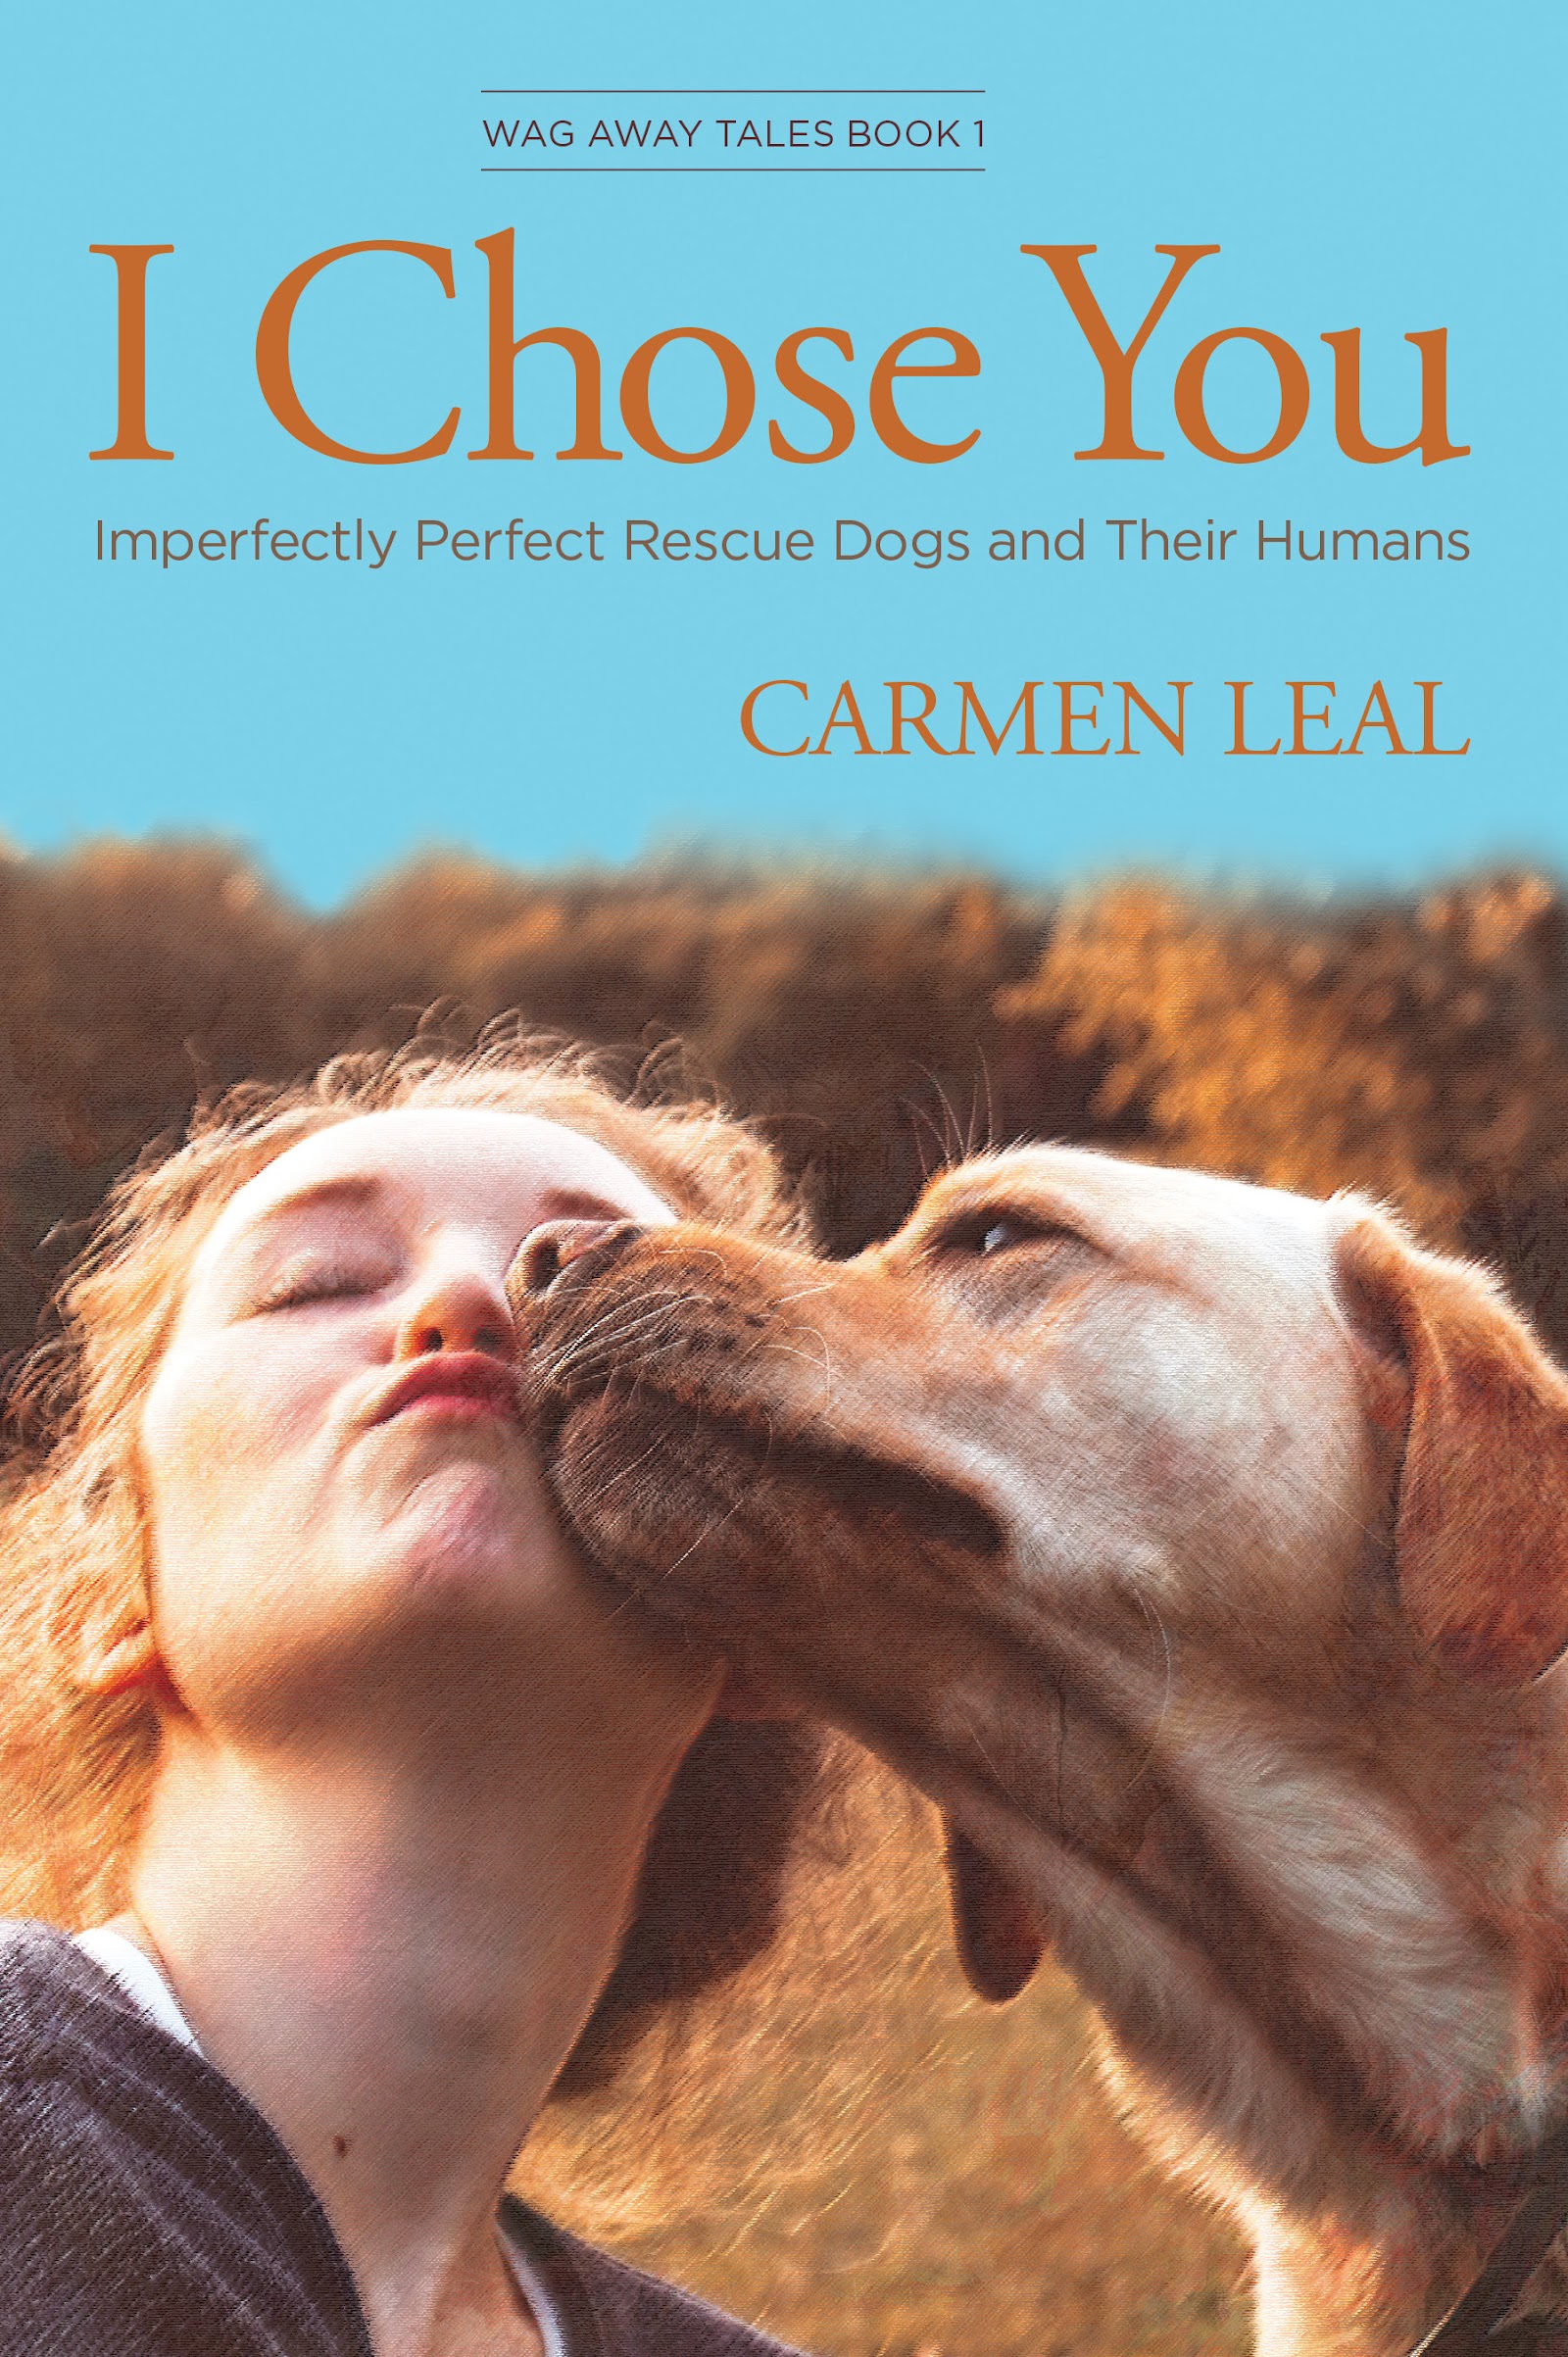  I Chose You by Carmen Leal